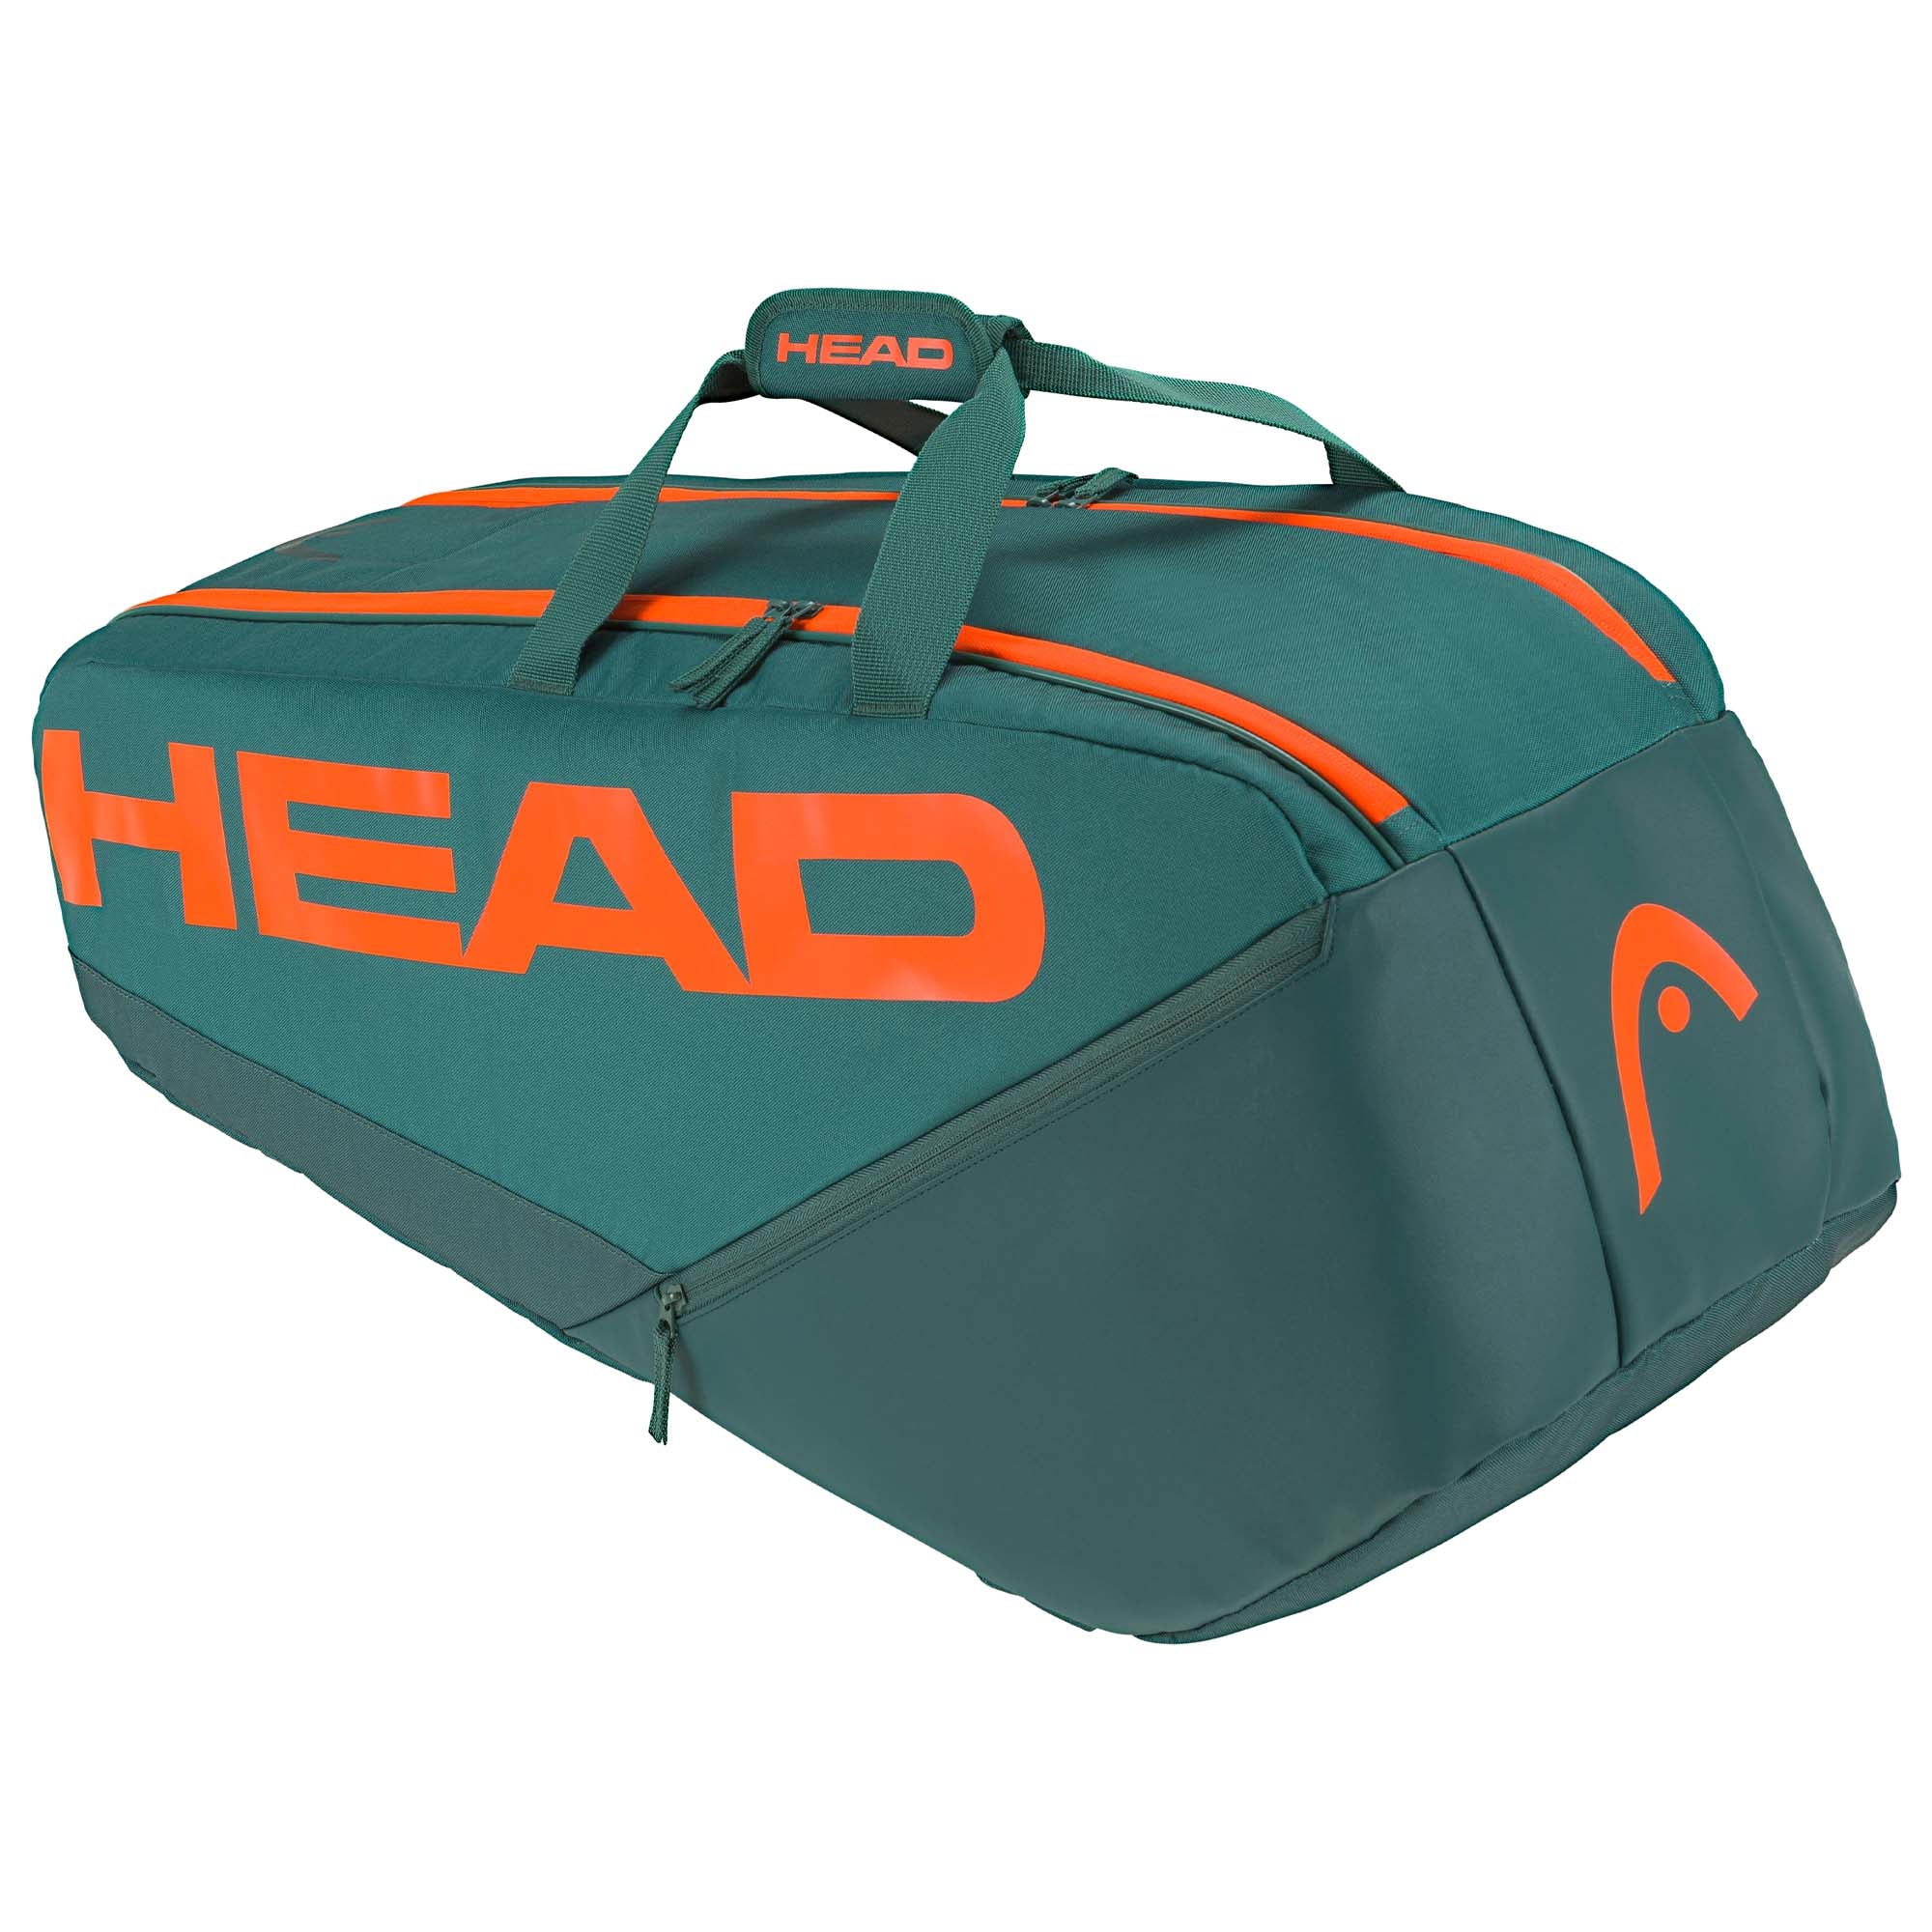 Head Pro 9 Racket Bag